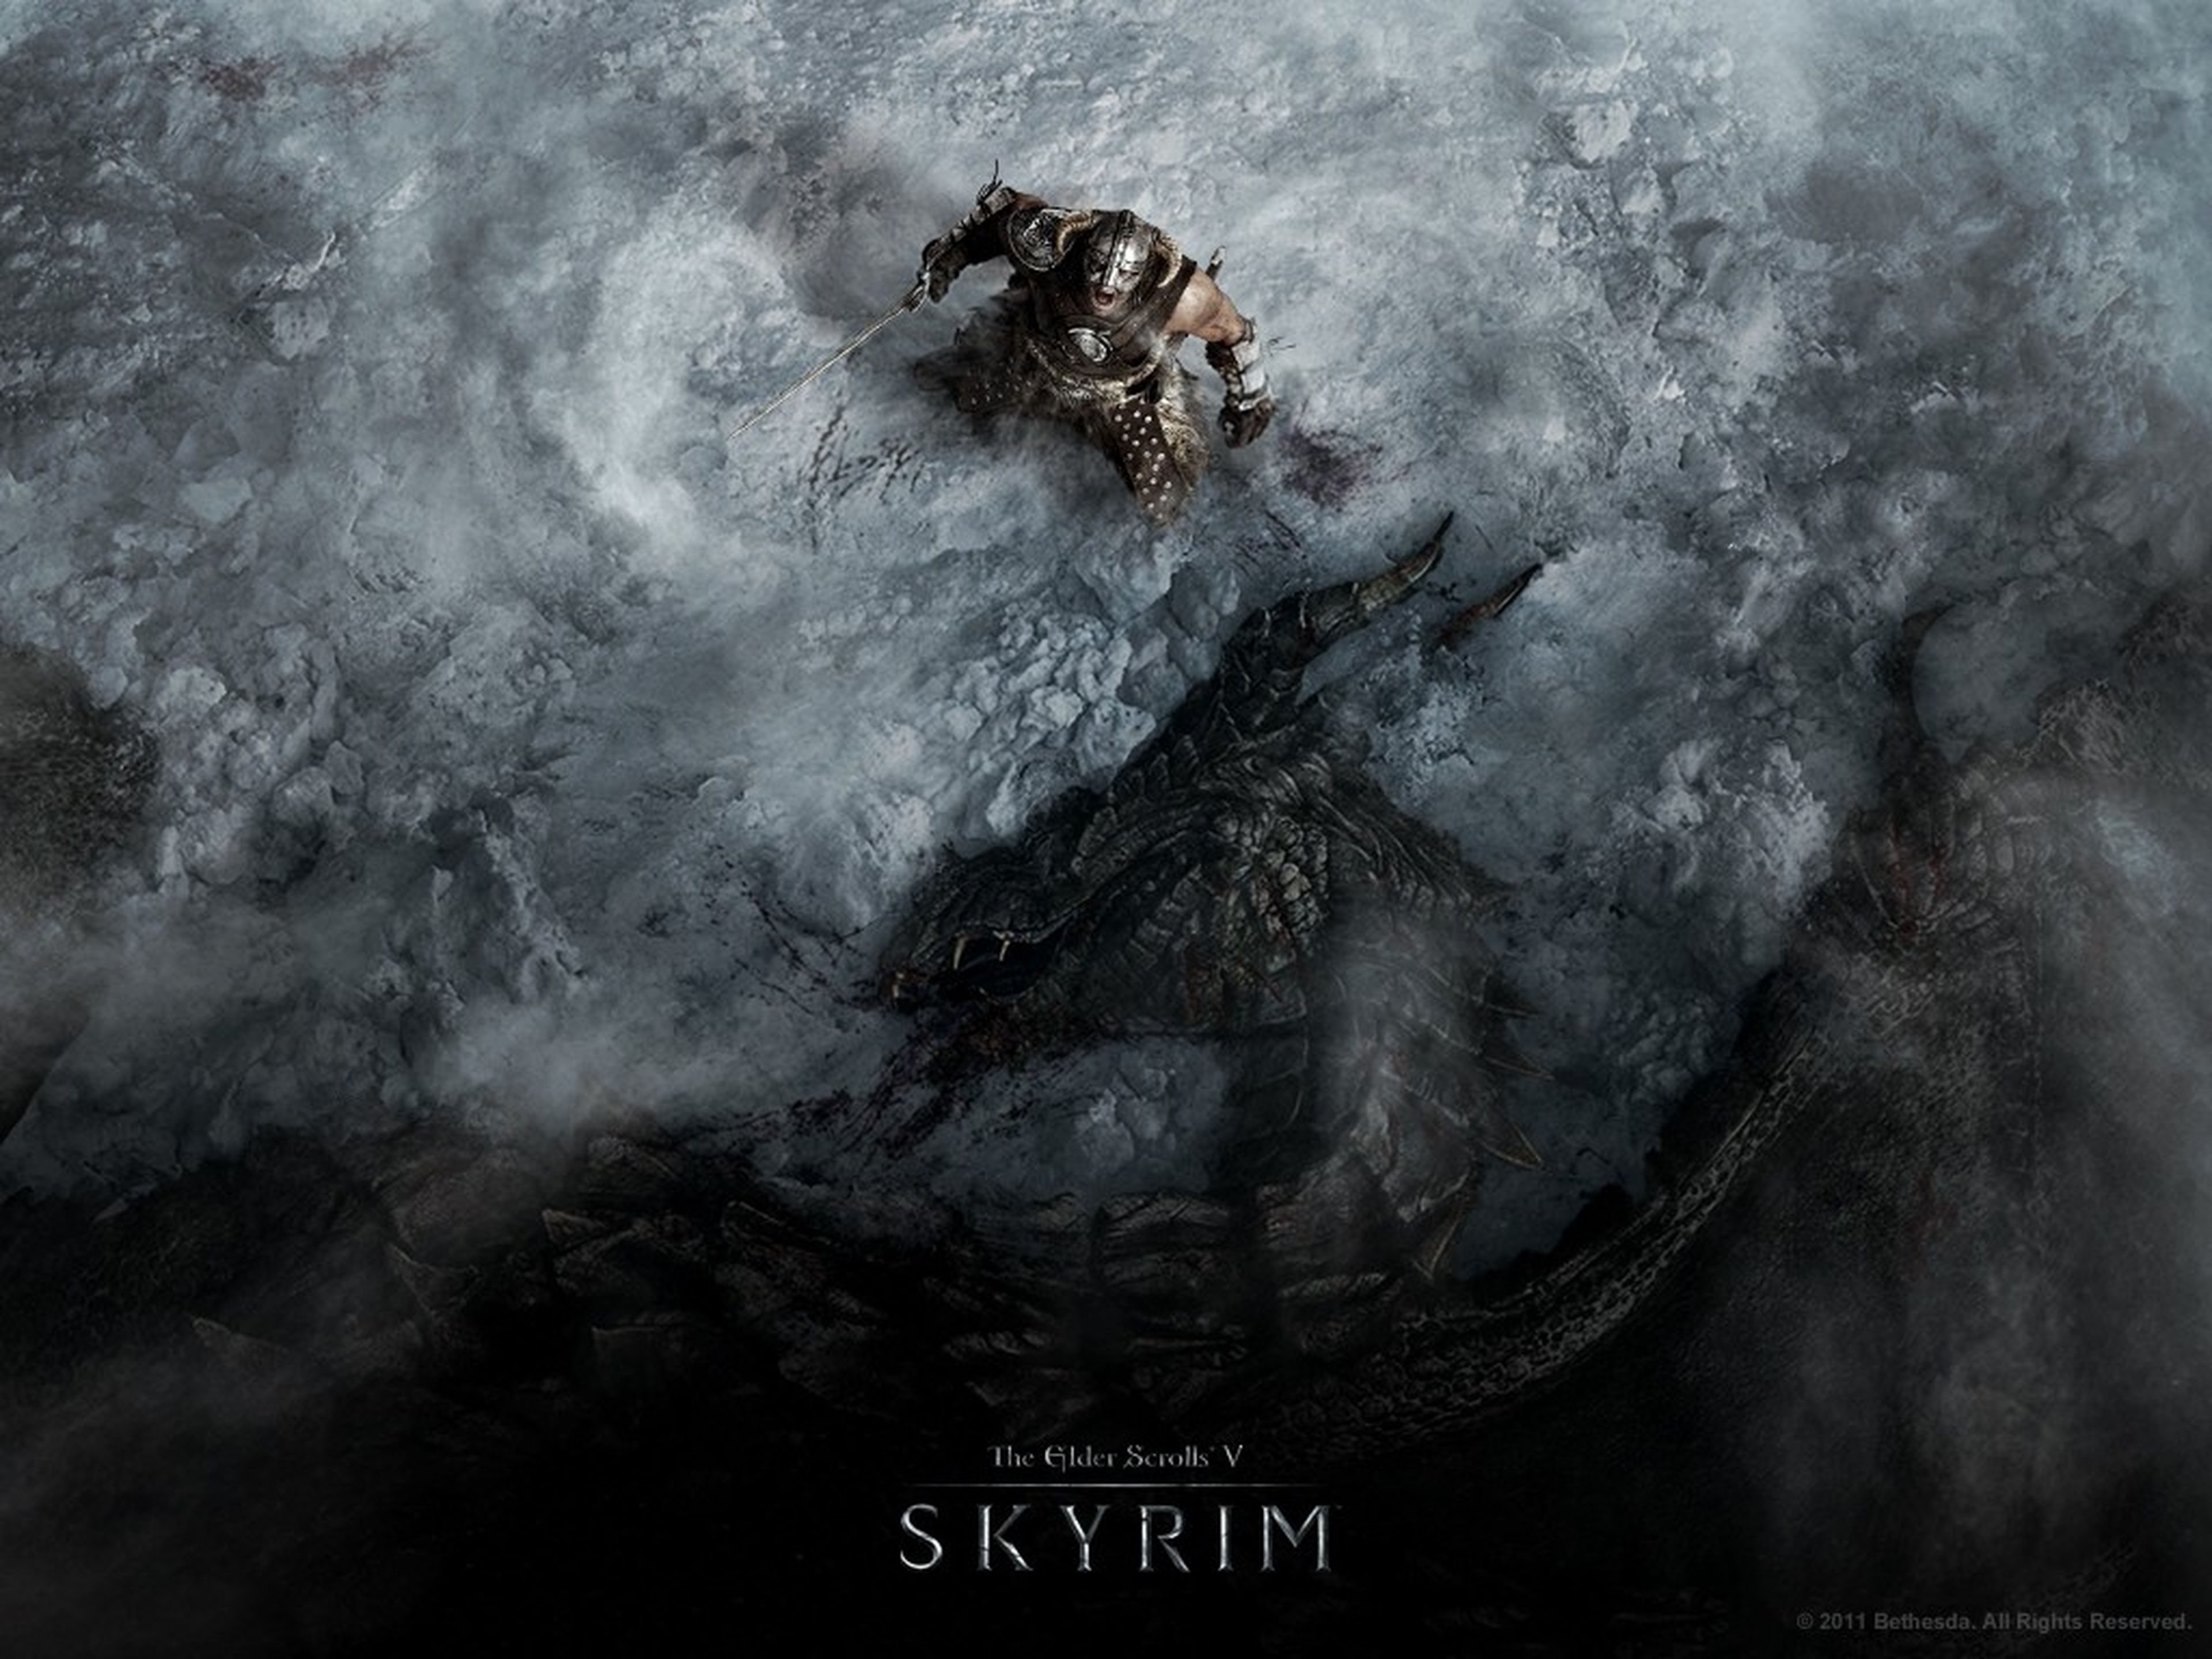 The Elder Scrolls V: Skyrim, Falskaar, nuevo mod